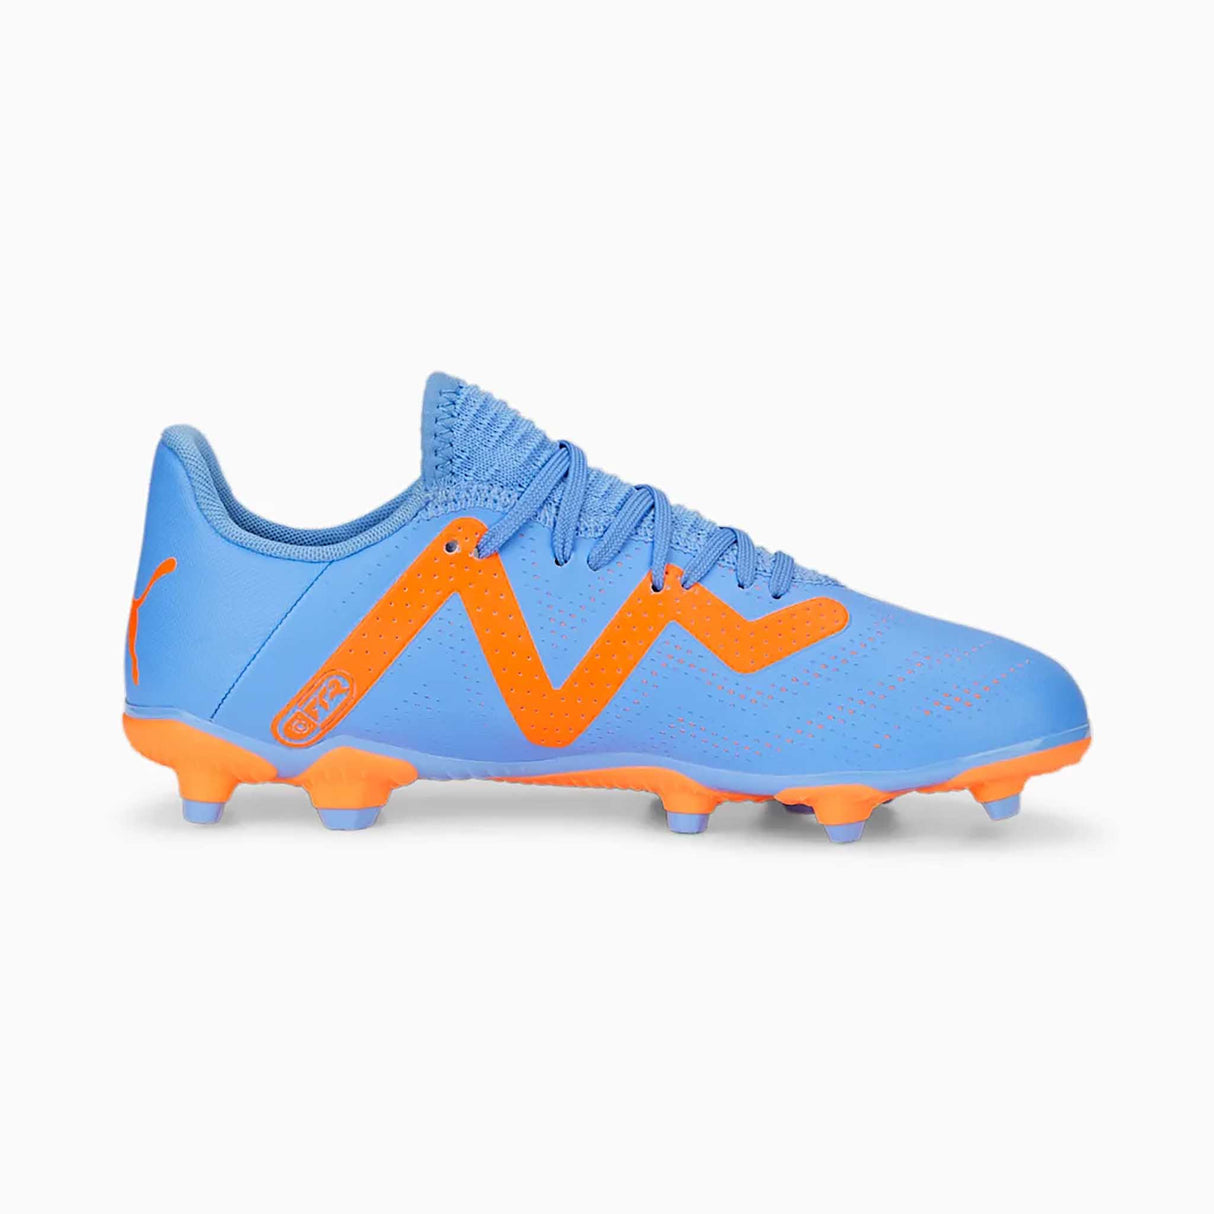 Puma Future Play FG/AG souliers soccer enfant lateral- blue glimmer / white / orange